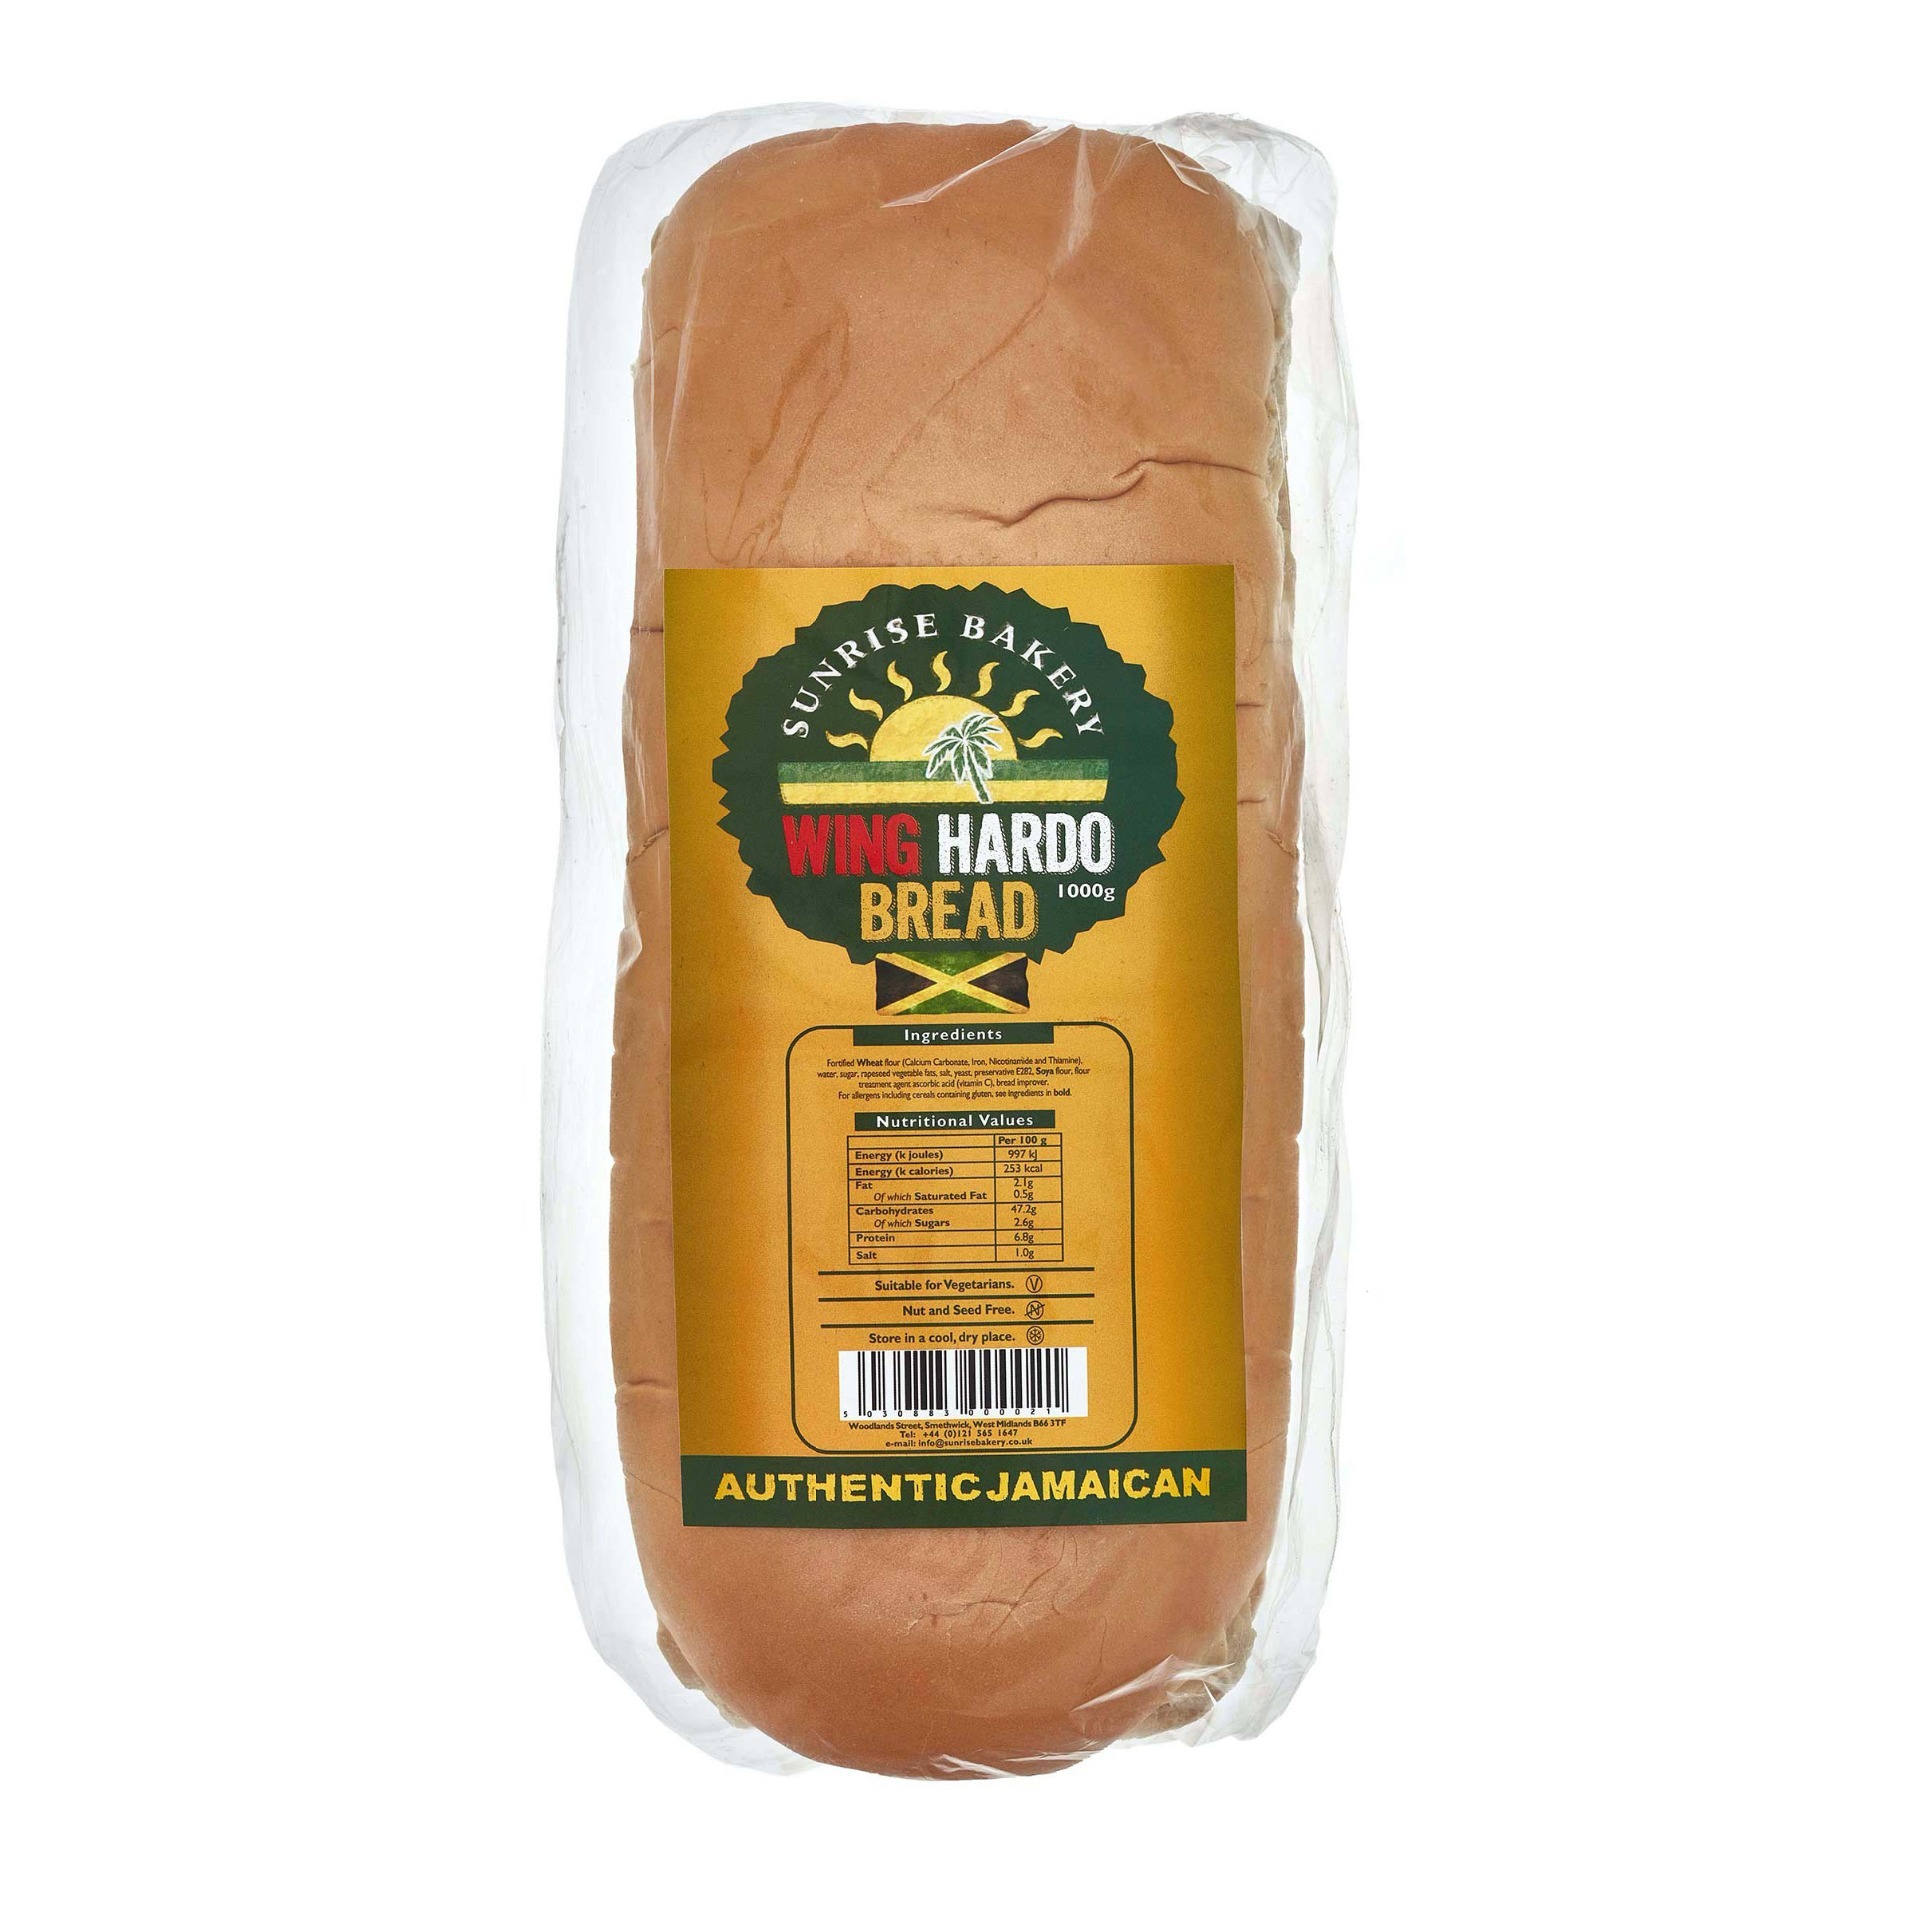 Wing Hardo bread